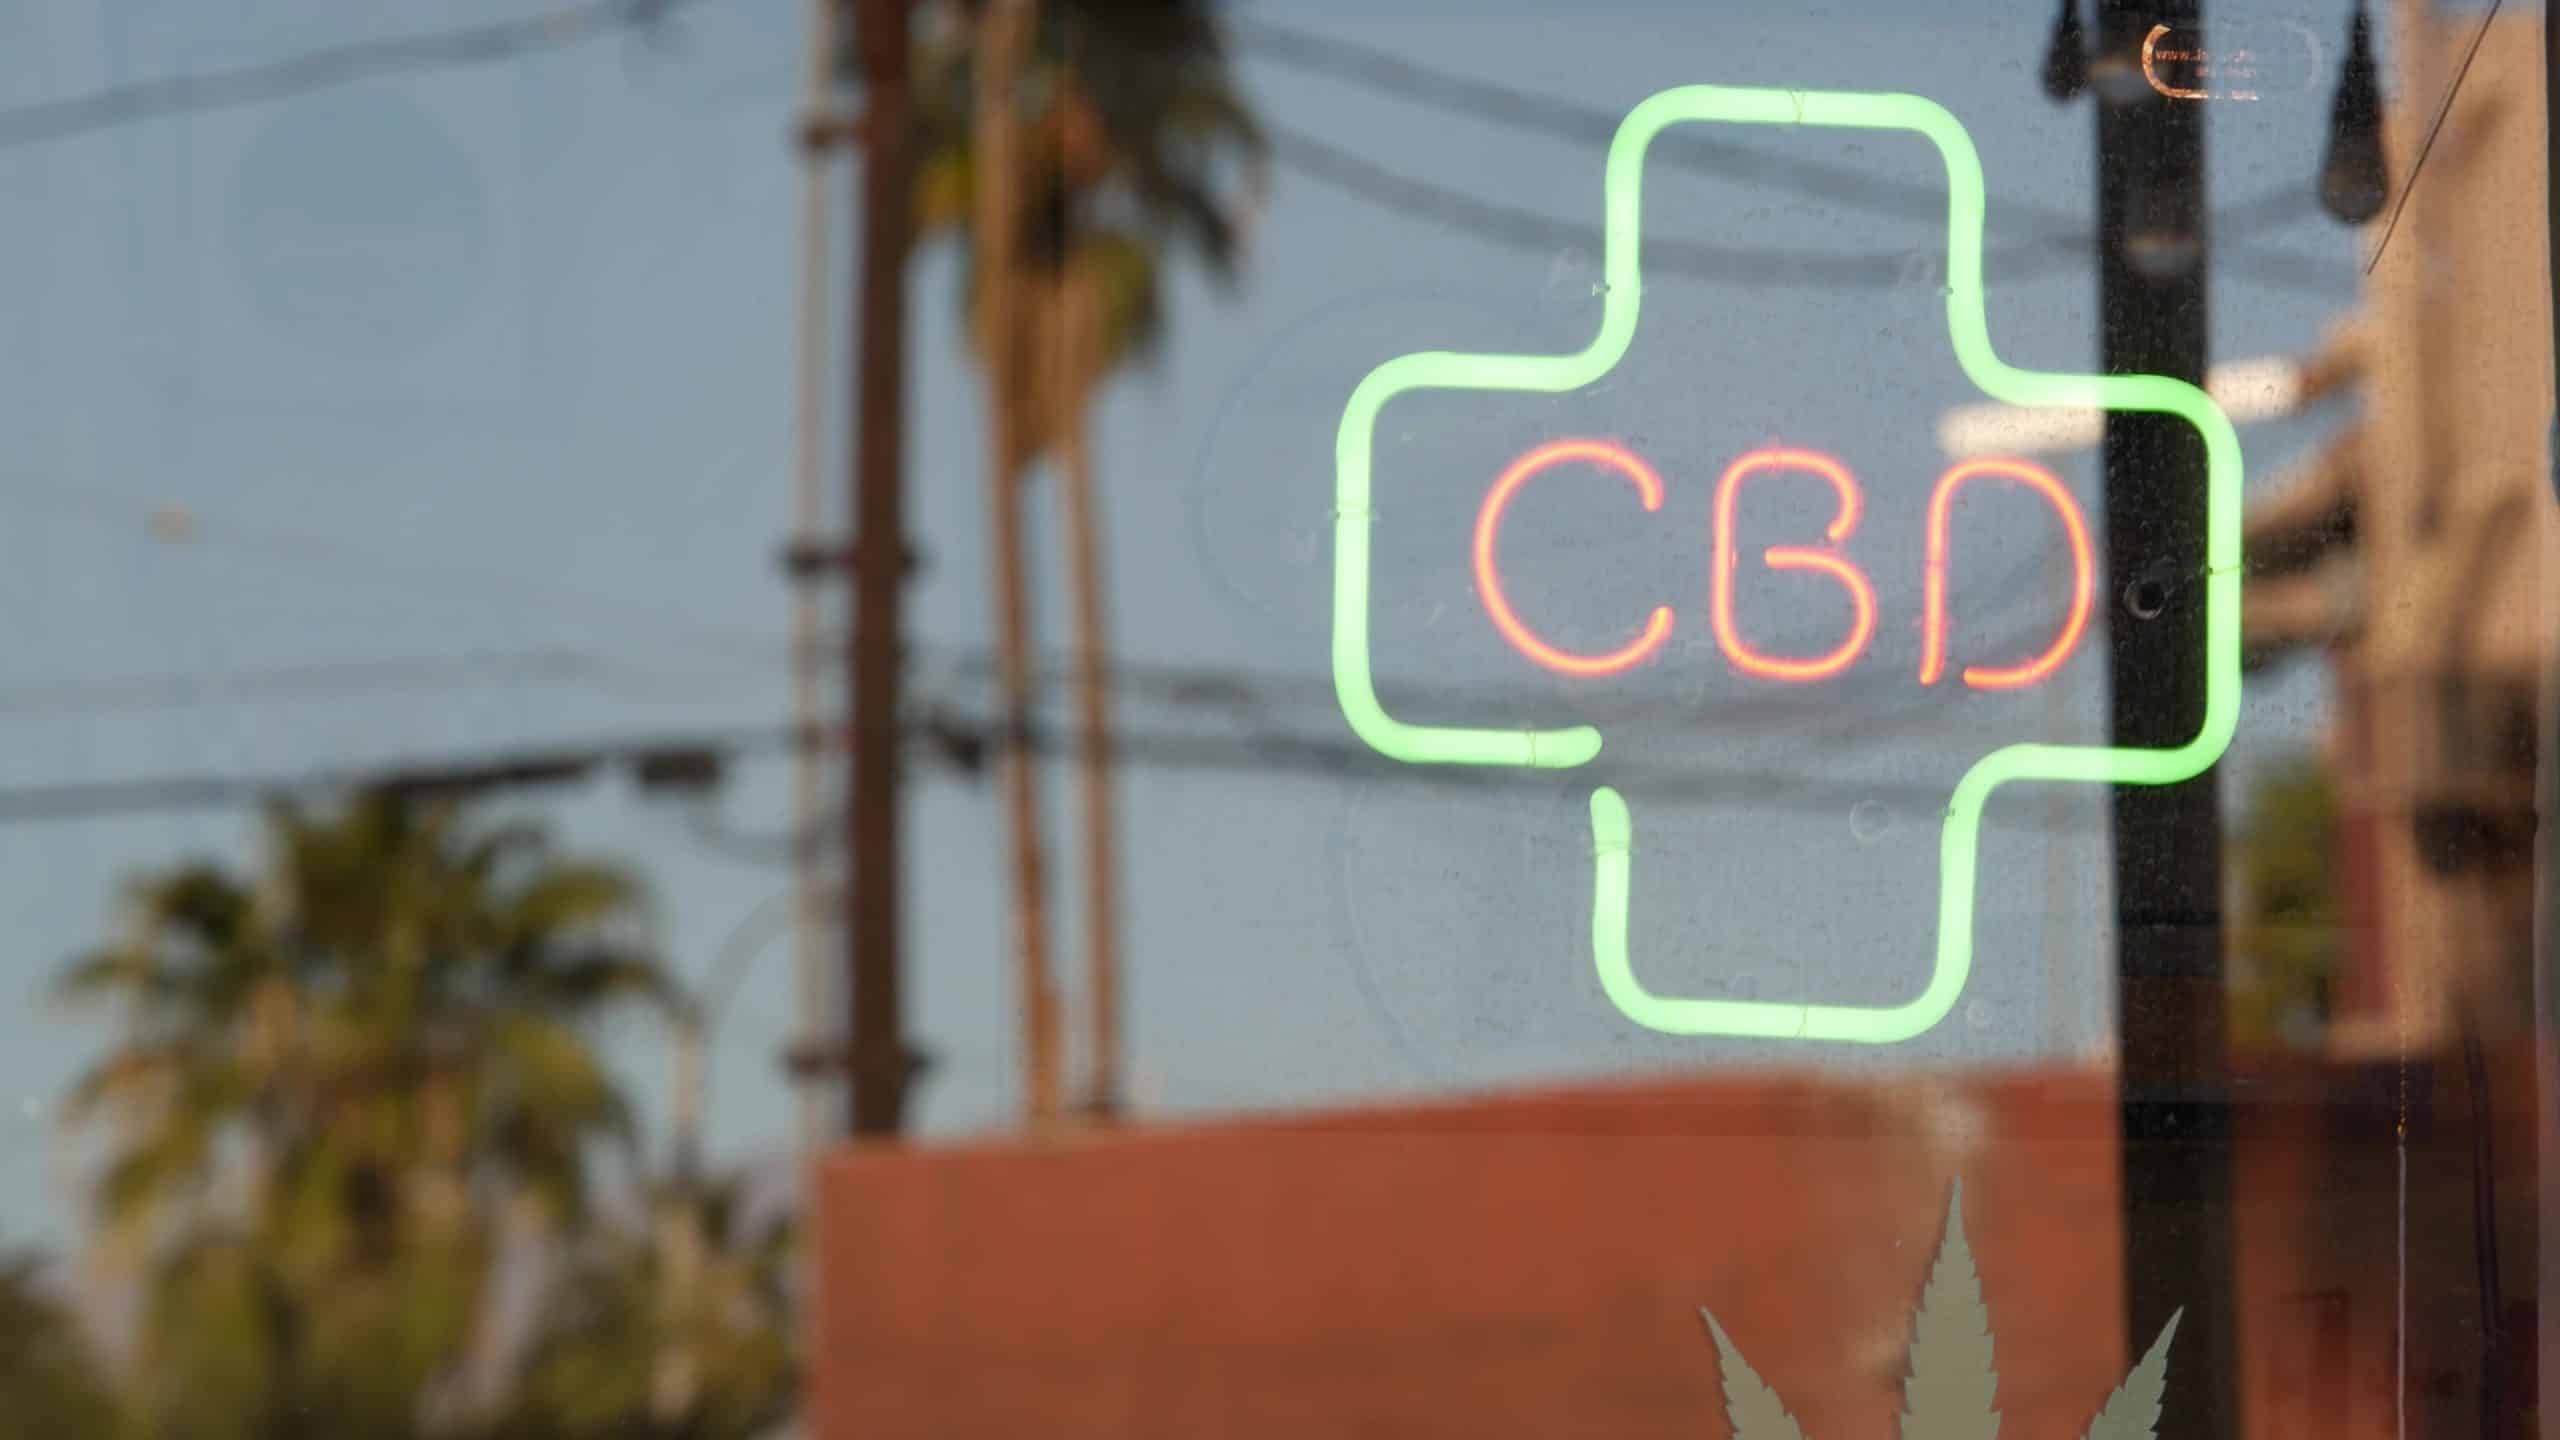 Neon sign in smoke shop, legalized cbd oil or medical cannabis in store, California USA. Legal sale of cannabidiol, weed, hemp, marijuana, ganja or hashish in dispensary. Cannabinoids in drugstore.